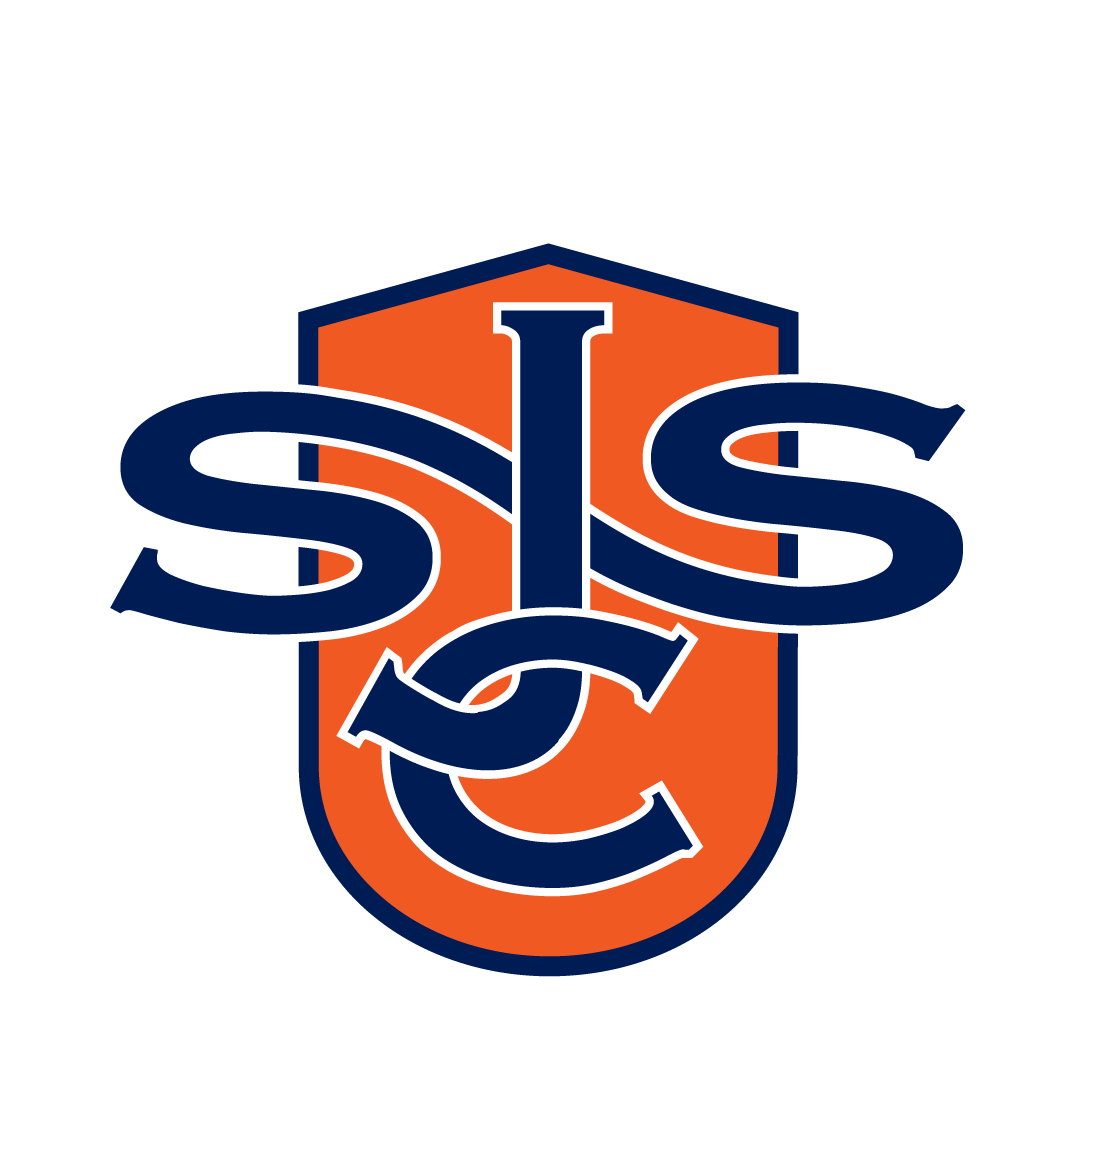 San Jose Christian School 